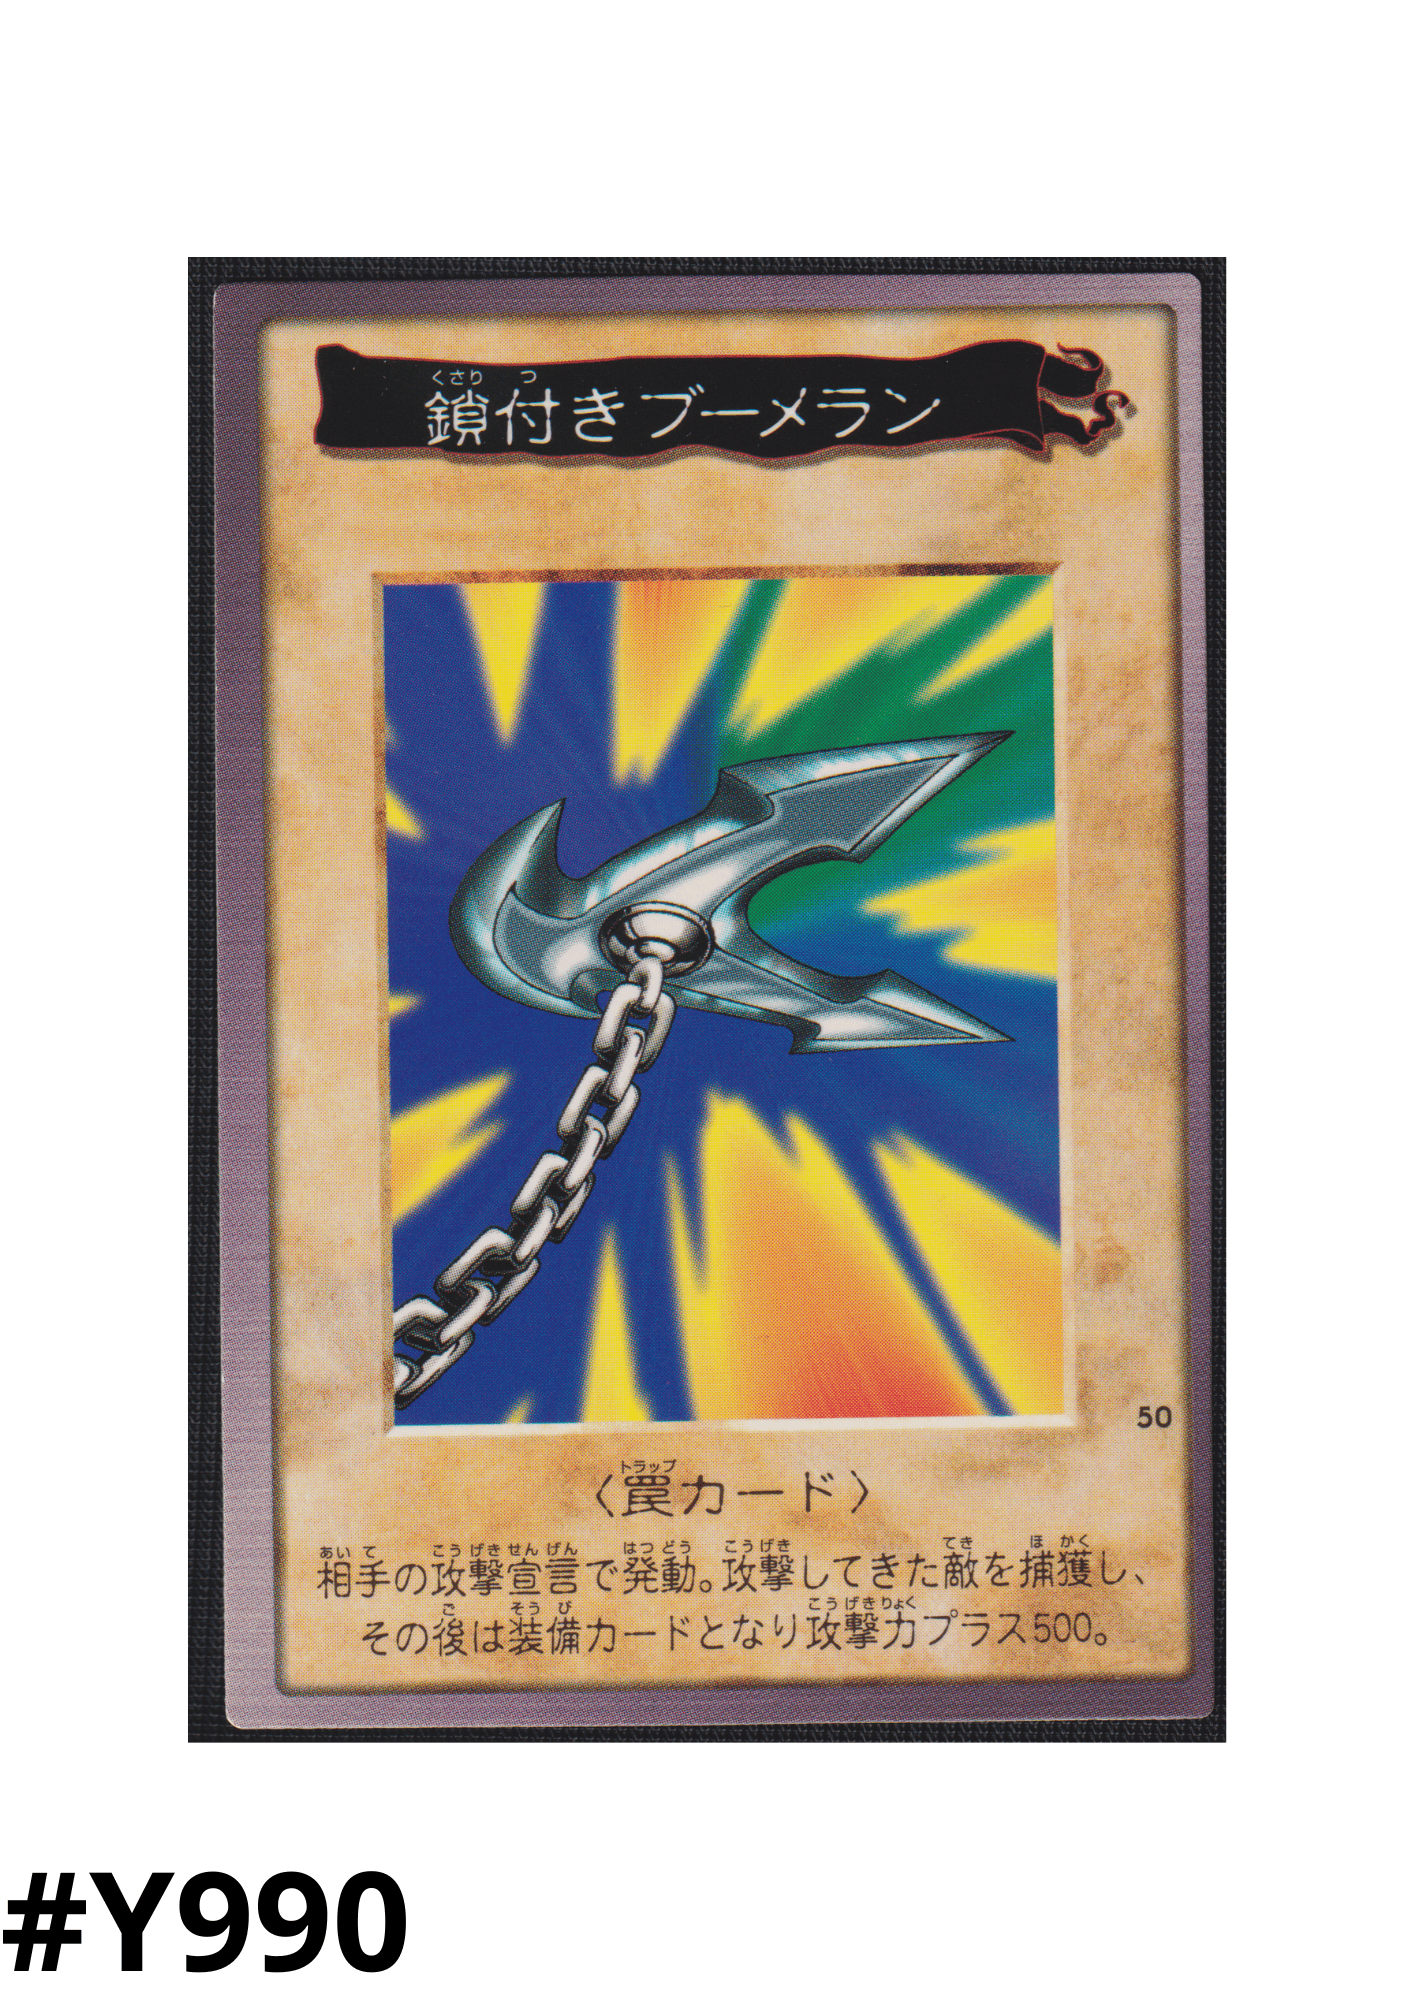 Yu Gi Oh! | Bandai Card No.50 | Kunai with Chain